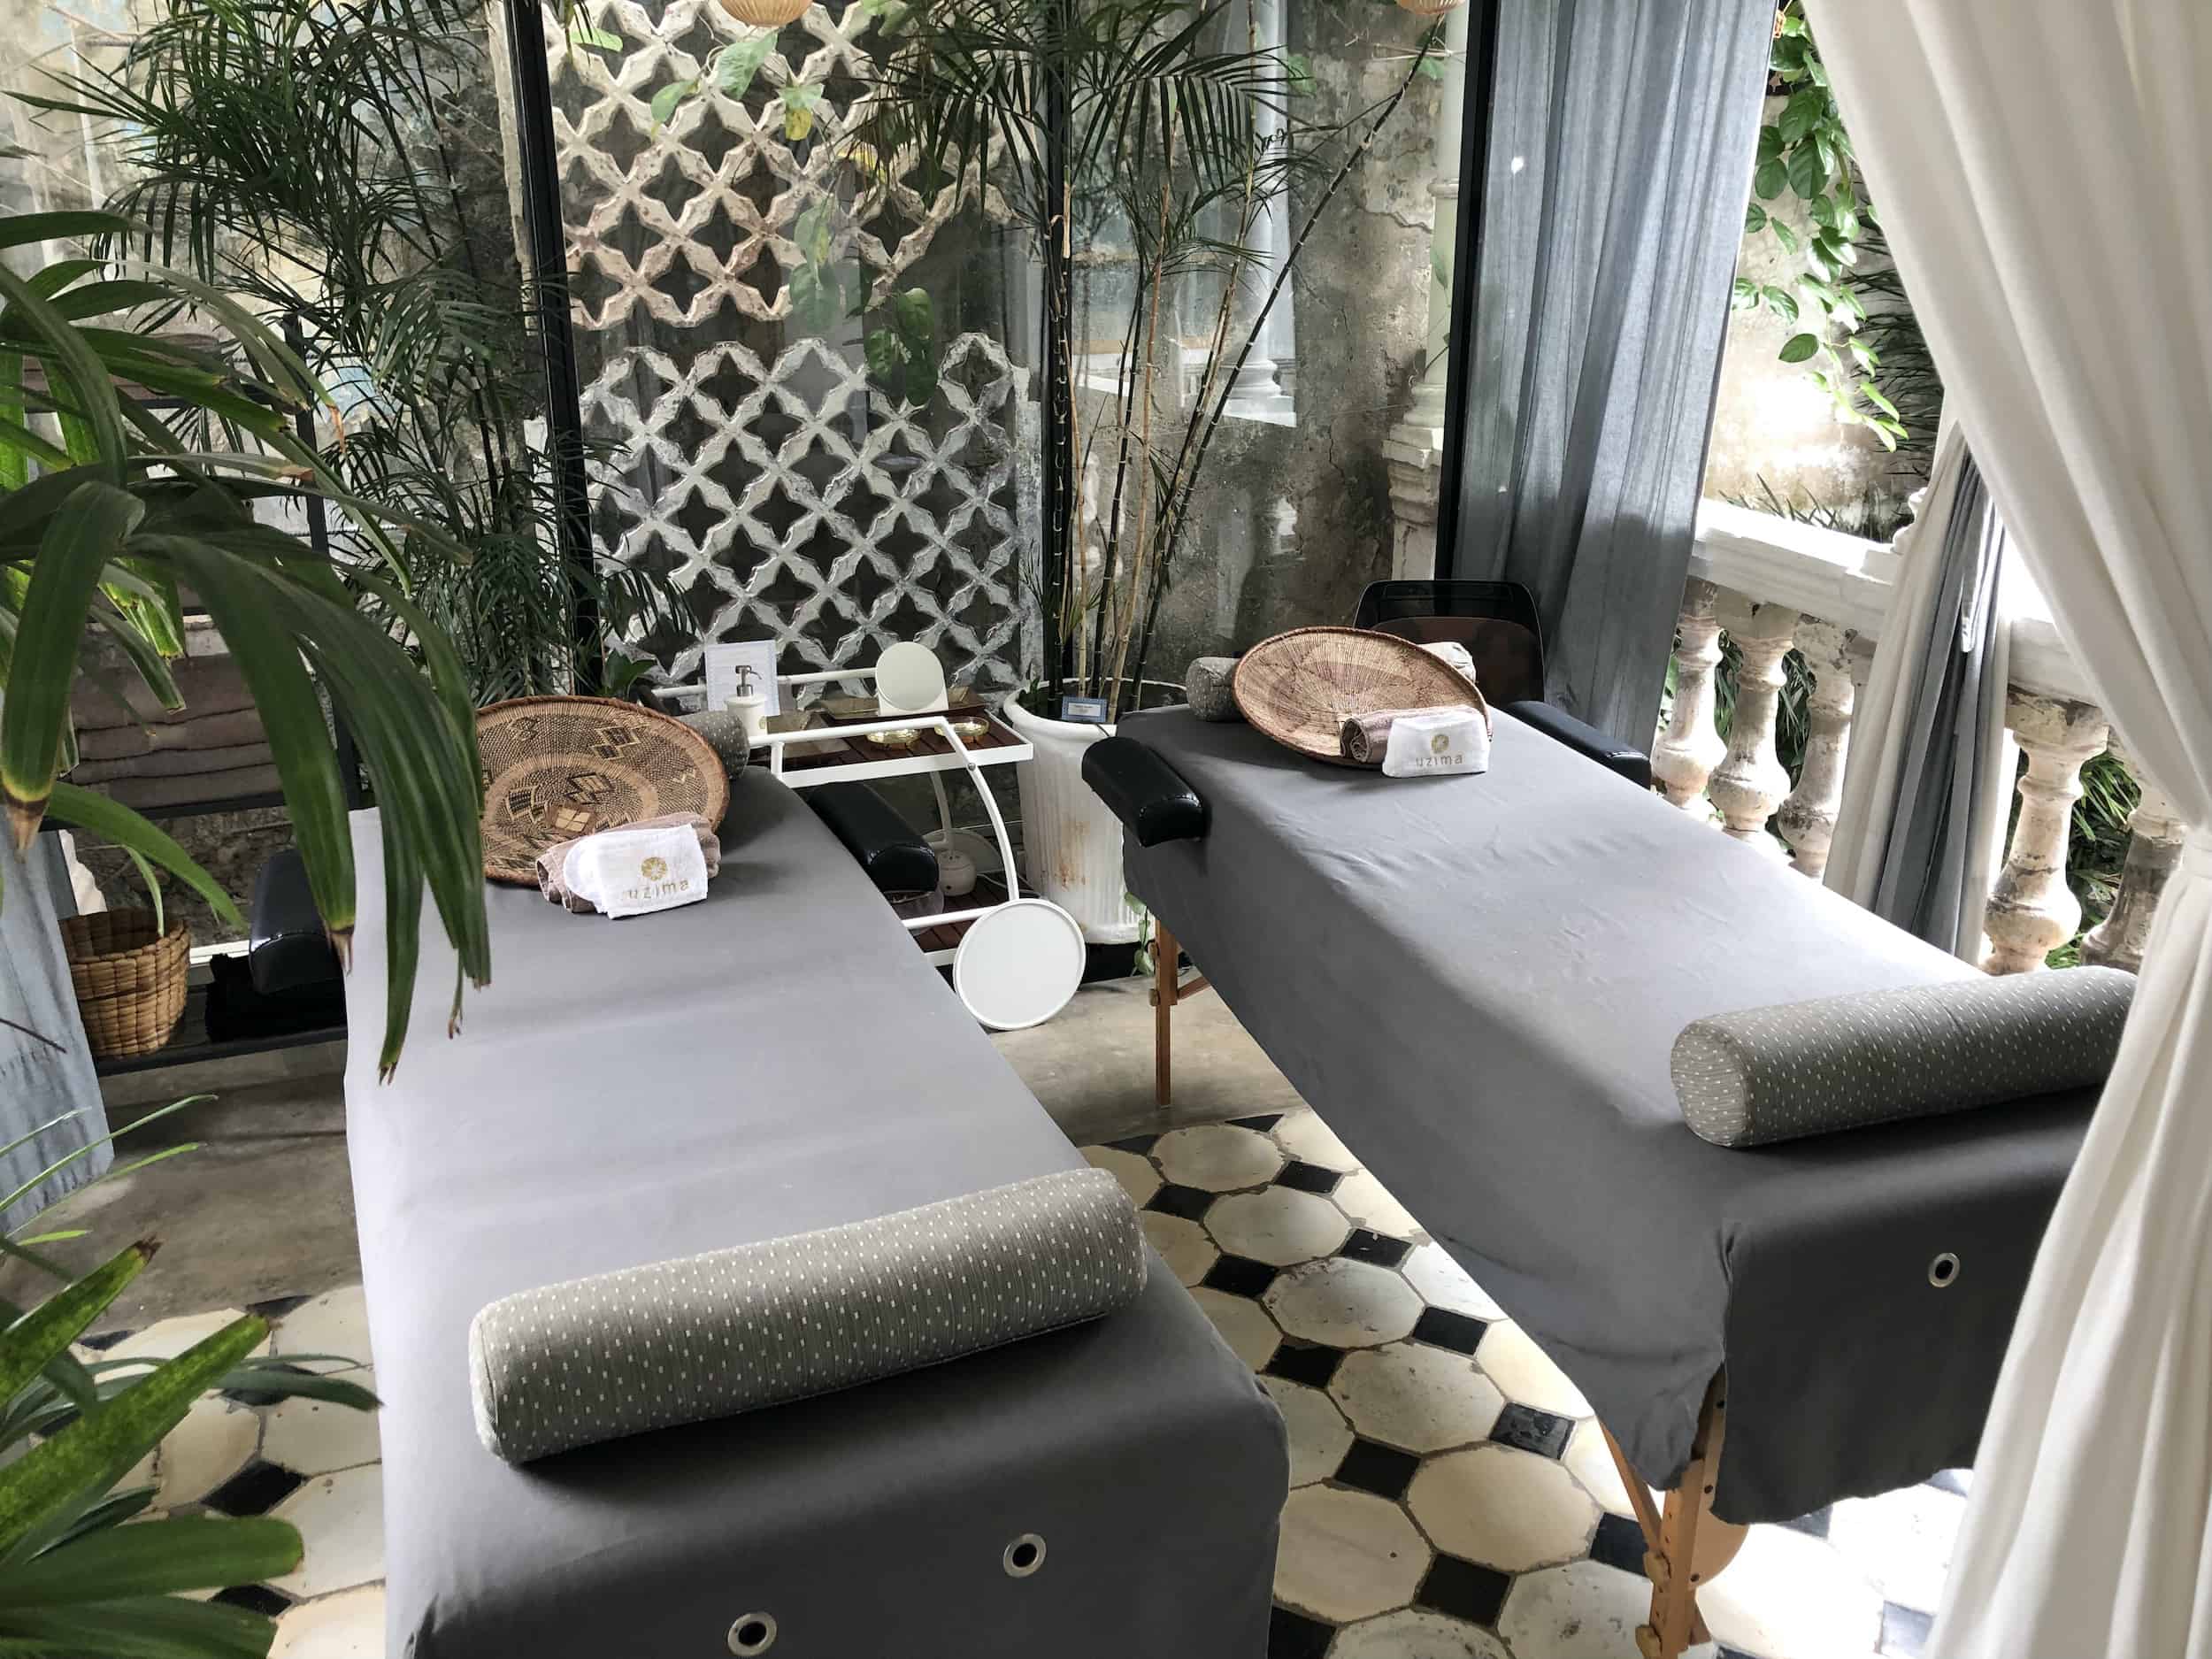 Massage tables at Casa Lola